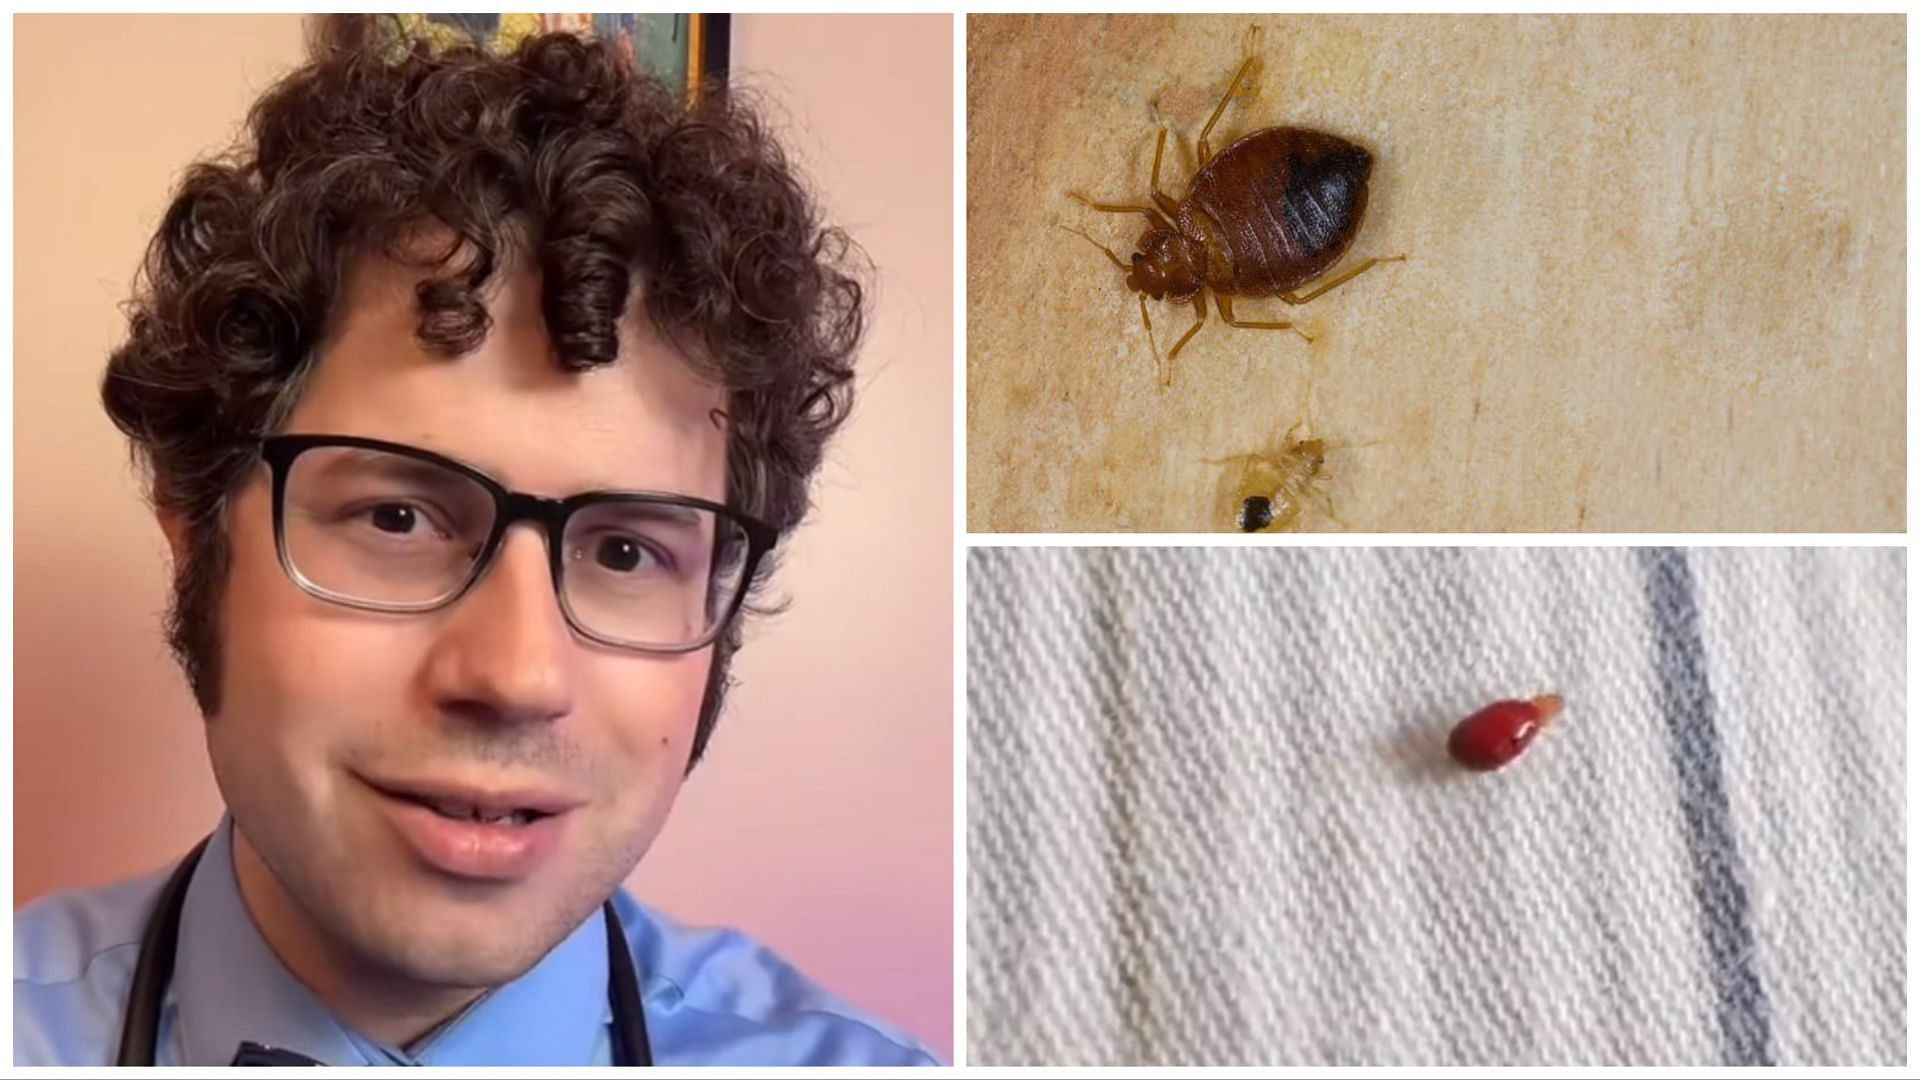 Dr. Zachary Rubin provides tips to deal with bedbugs, amidst Paris infestation (Image via X/@Ramy_Sawma, @mbdailyshow, TikTok/@rubin_allergy)